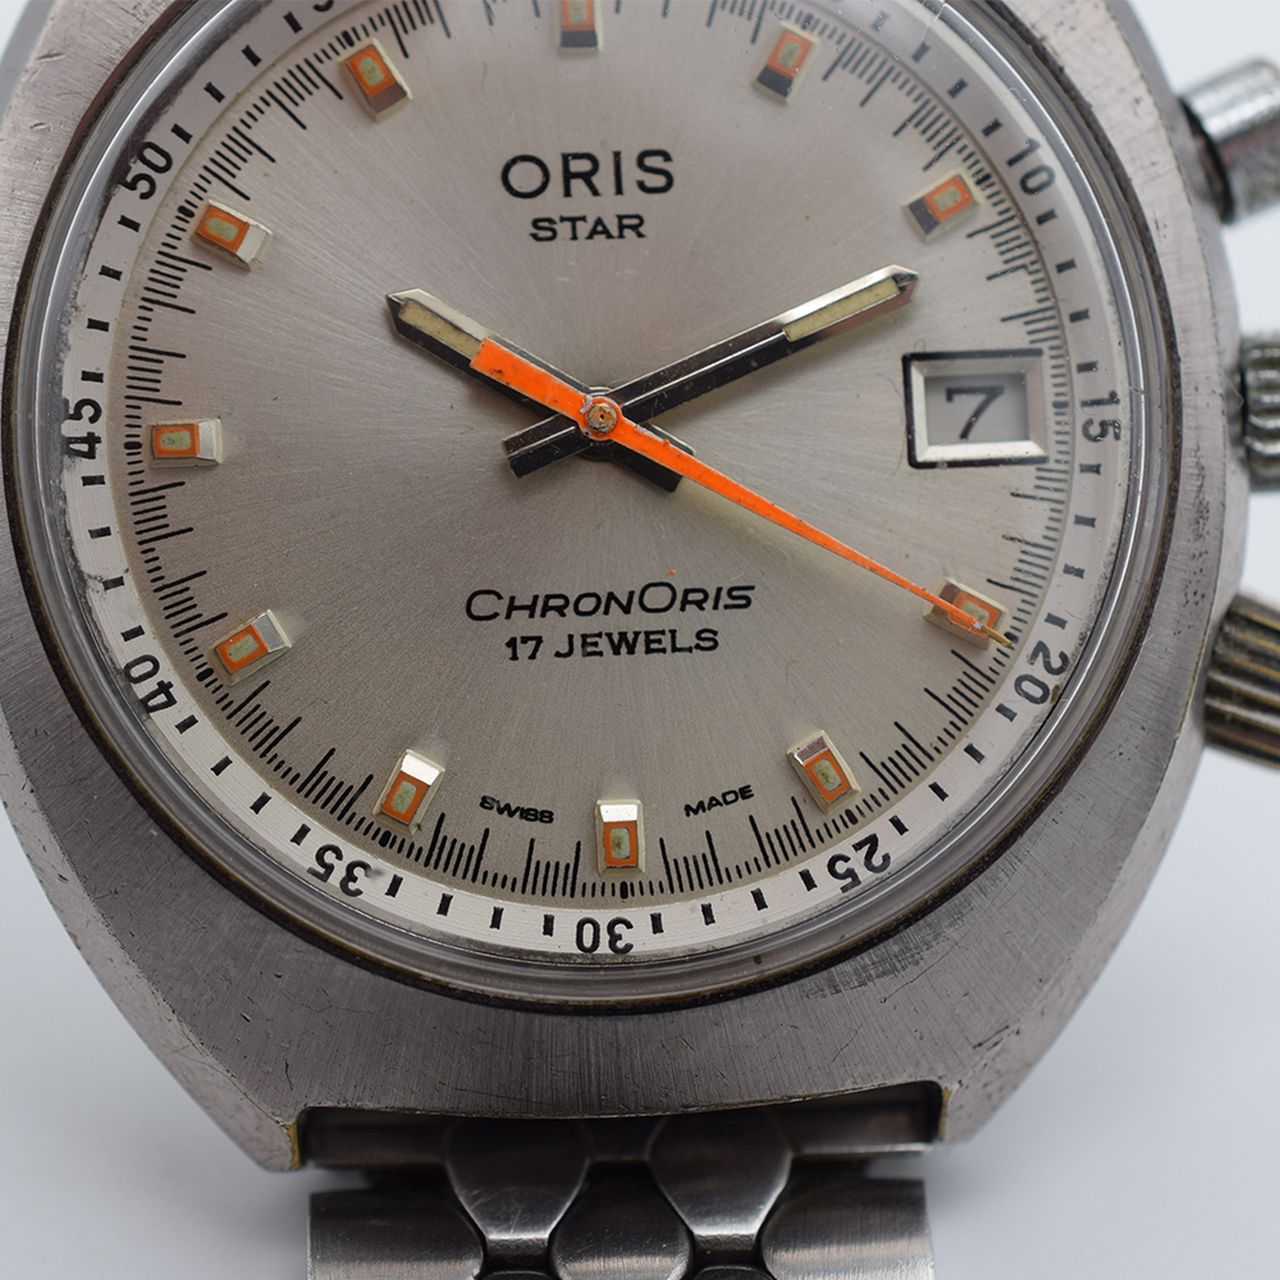 GENTLEMAN'S VINTAGE ORIS STAR CHRONORIS MONOPUSHER CHRONOGRAPH, CIRCA. 1970S, 38MM CASE, MANUALL - Image 6 of 9